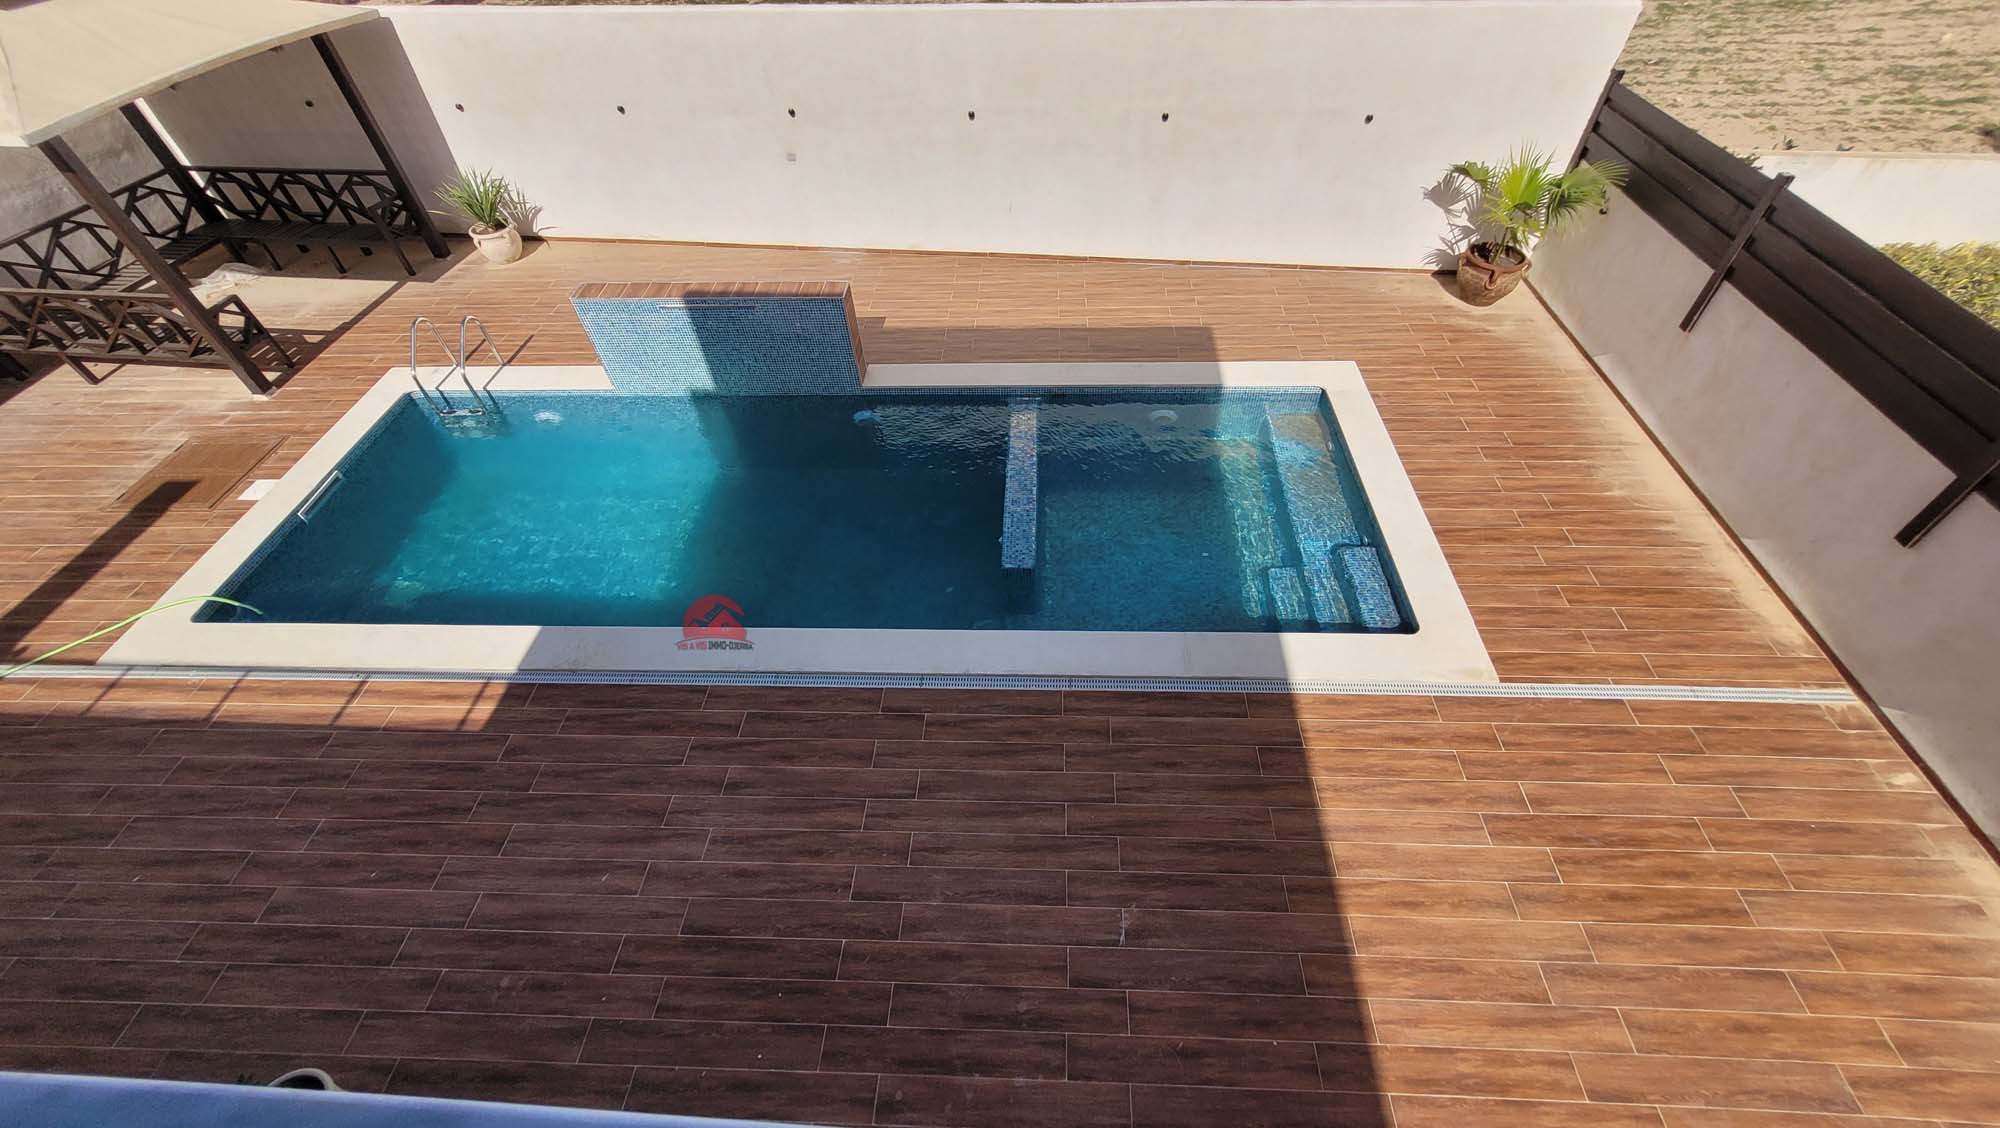 Djerba - Midoun Midoun Vente Duplex Duplex avec piscine a midoun djerba  ref v675